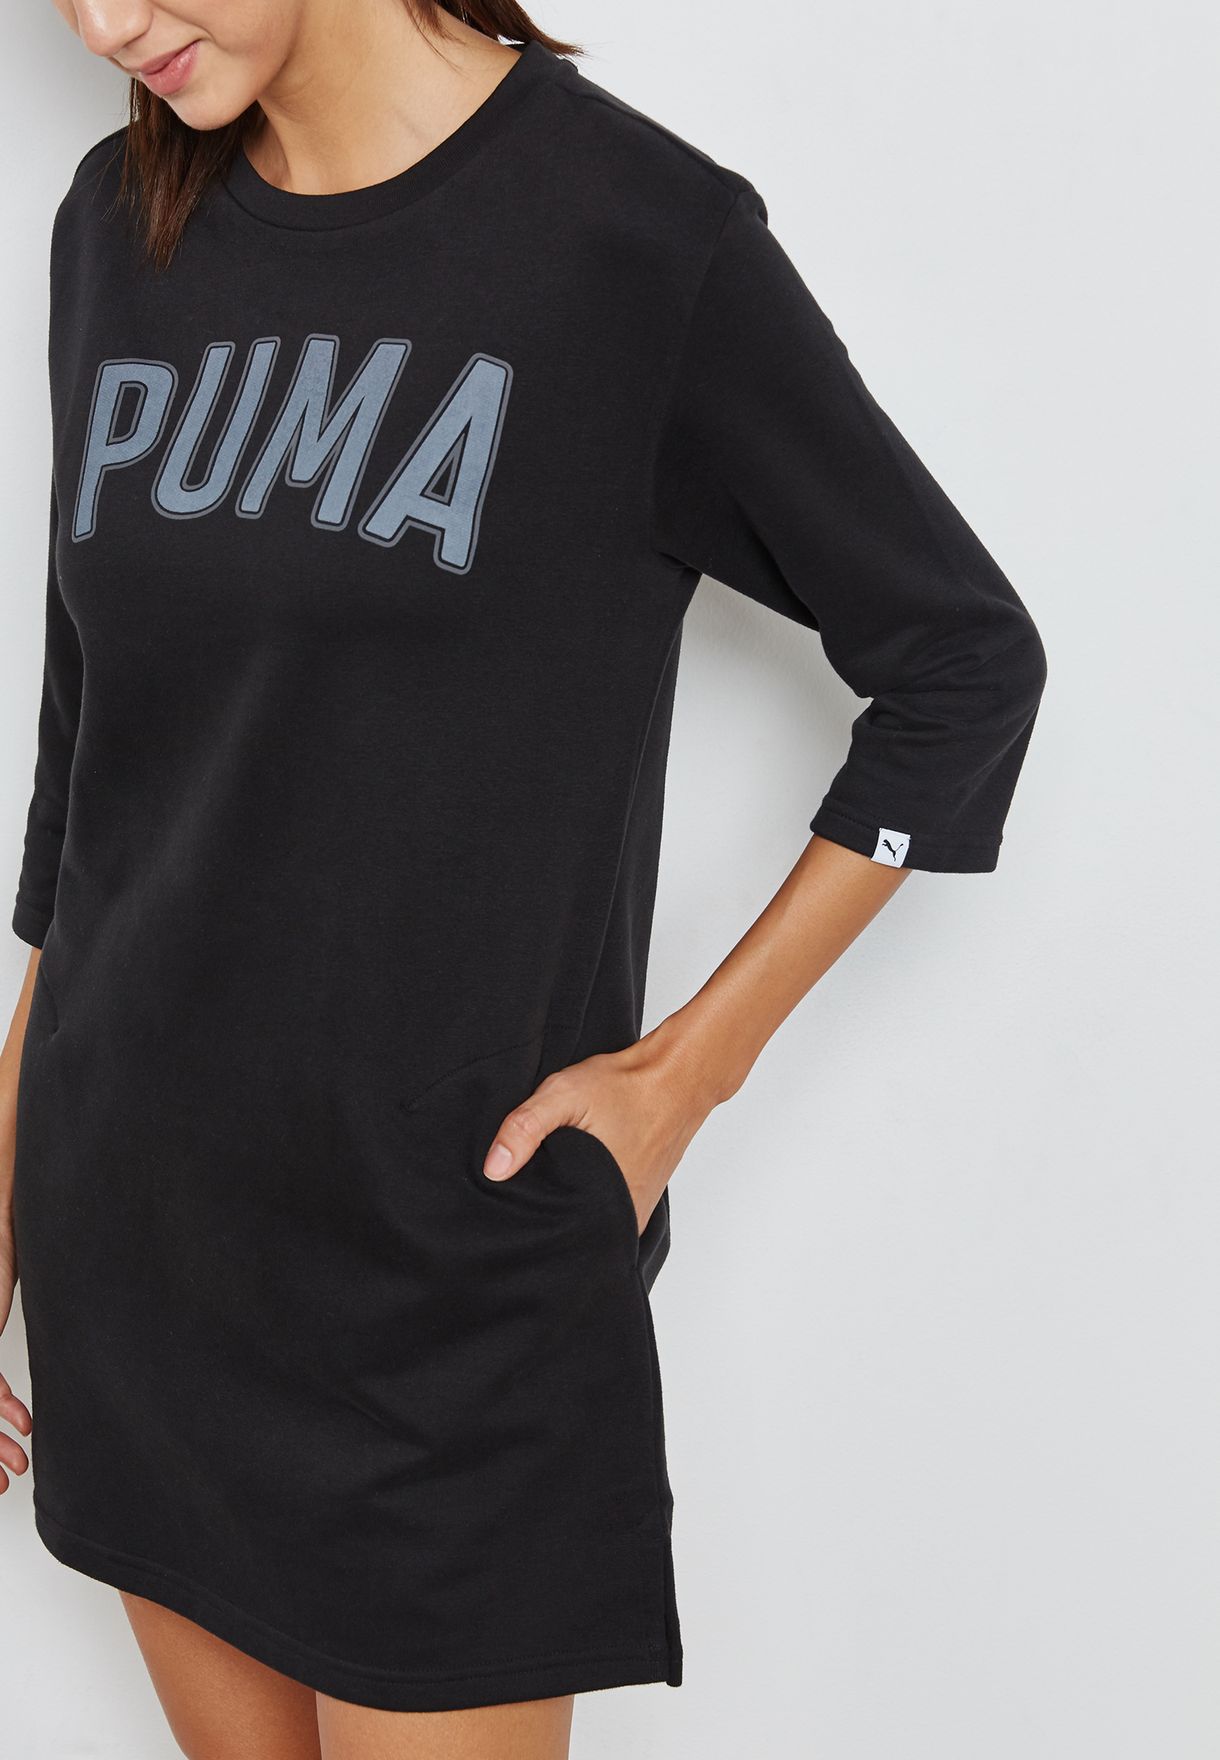 puma athletic dress